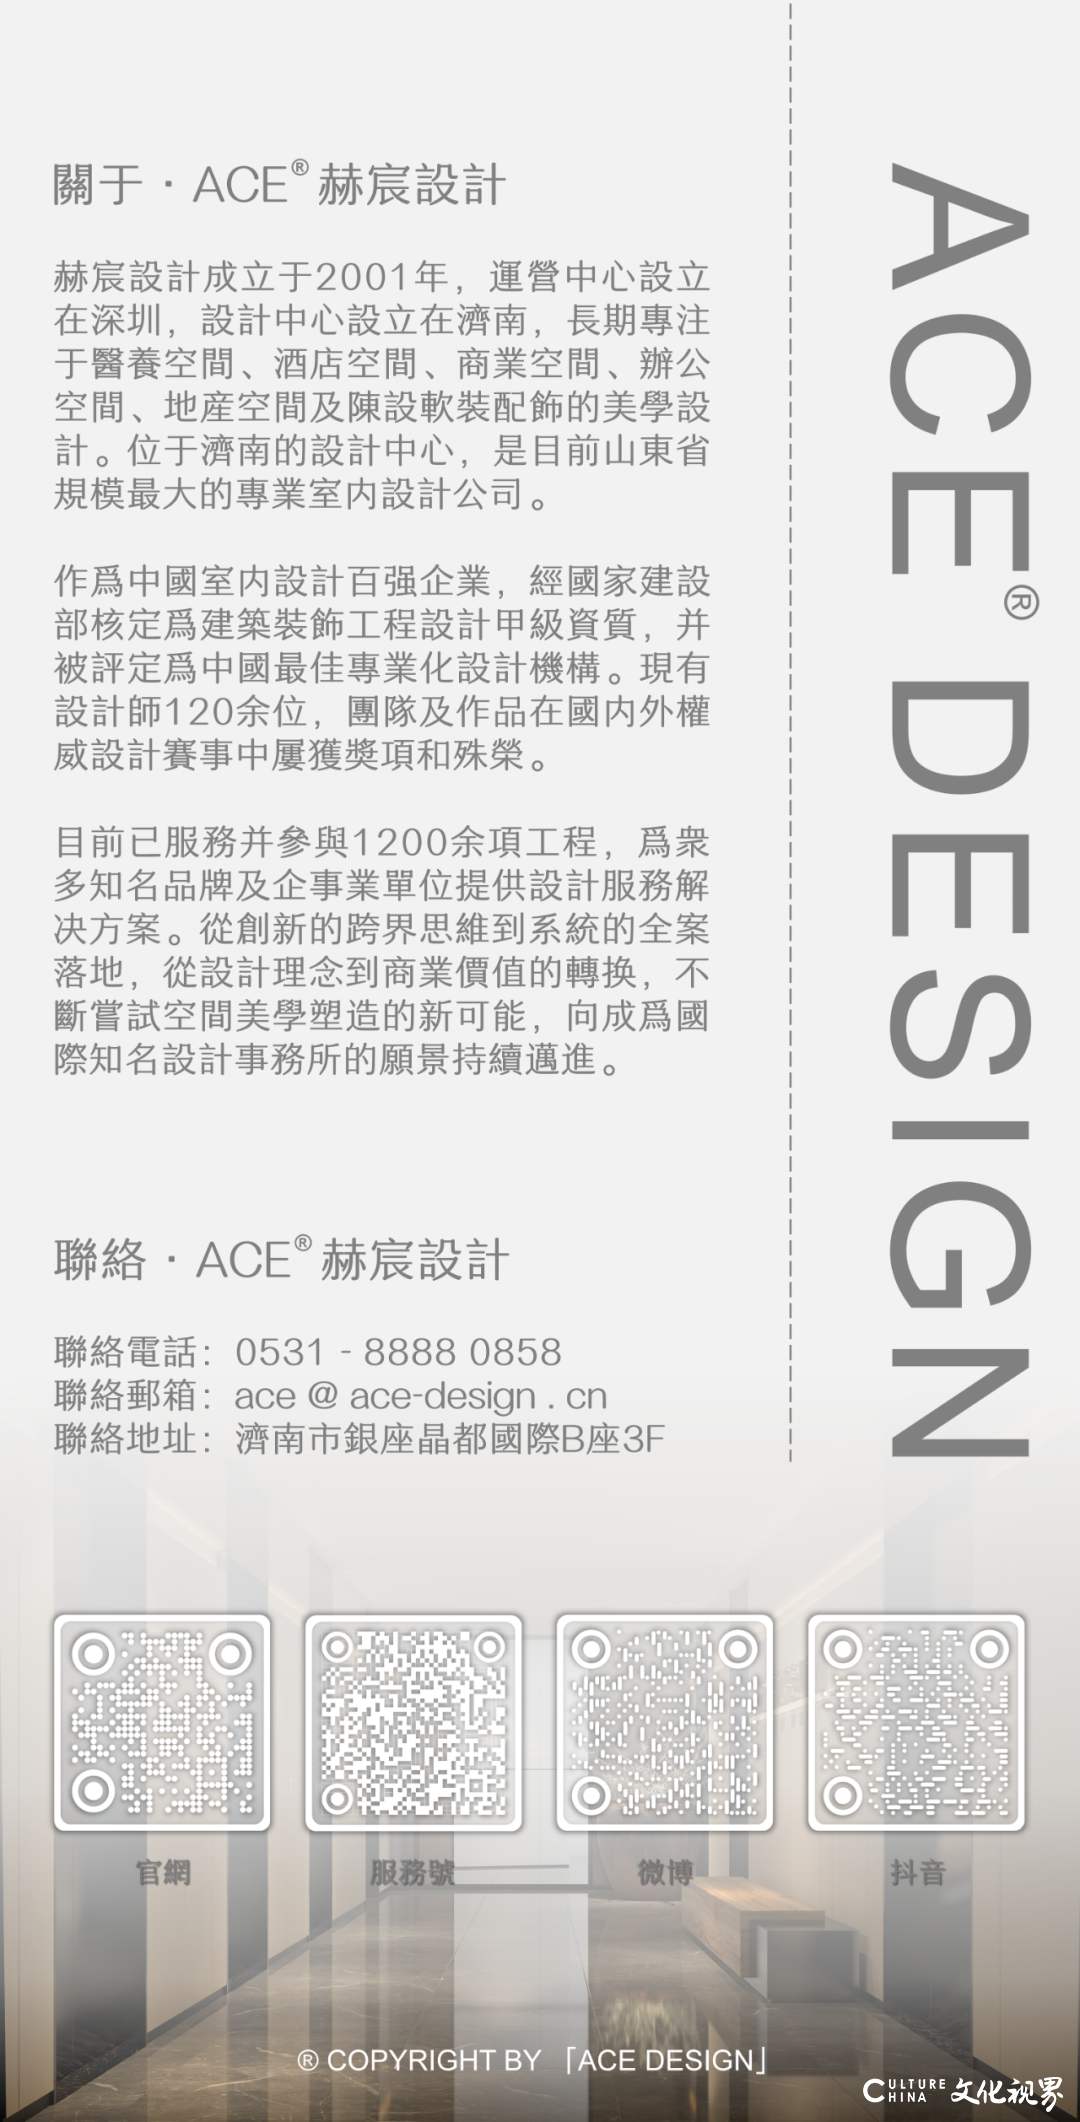 ACE赫宸设计正式成为山东青年政治学院设计艺术学院“大学生就业实习基地”